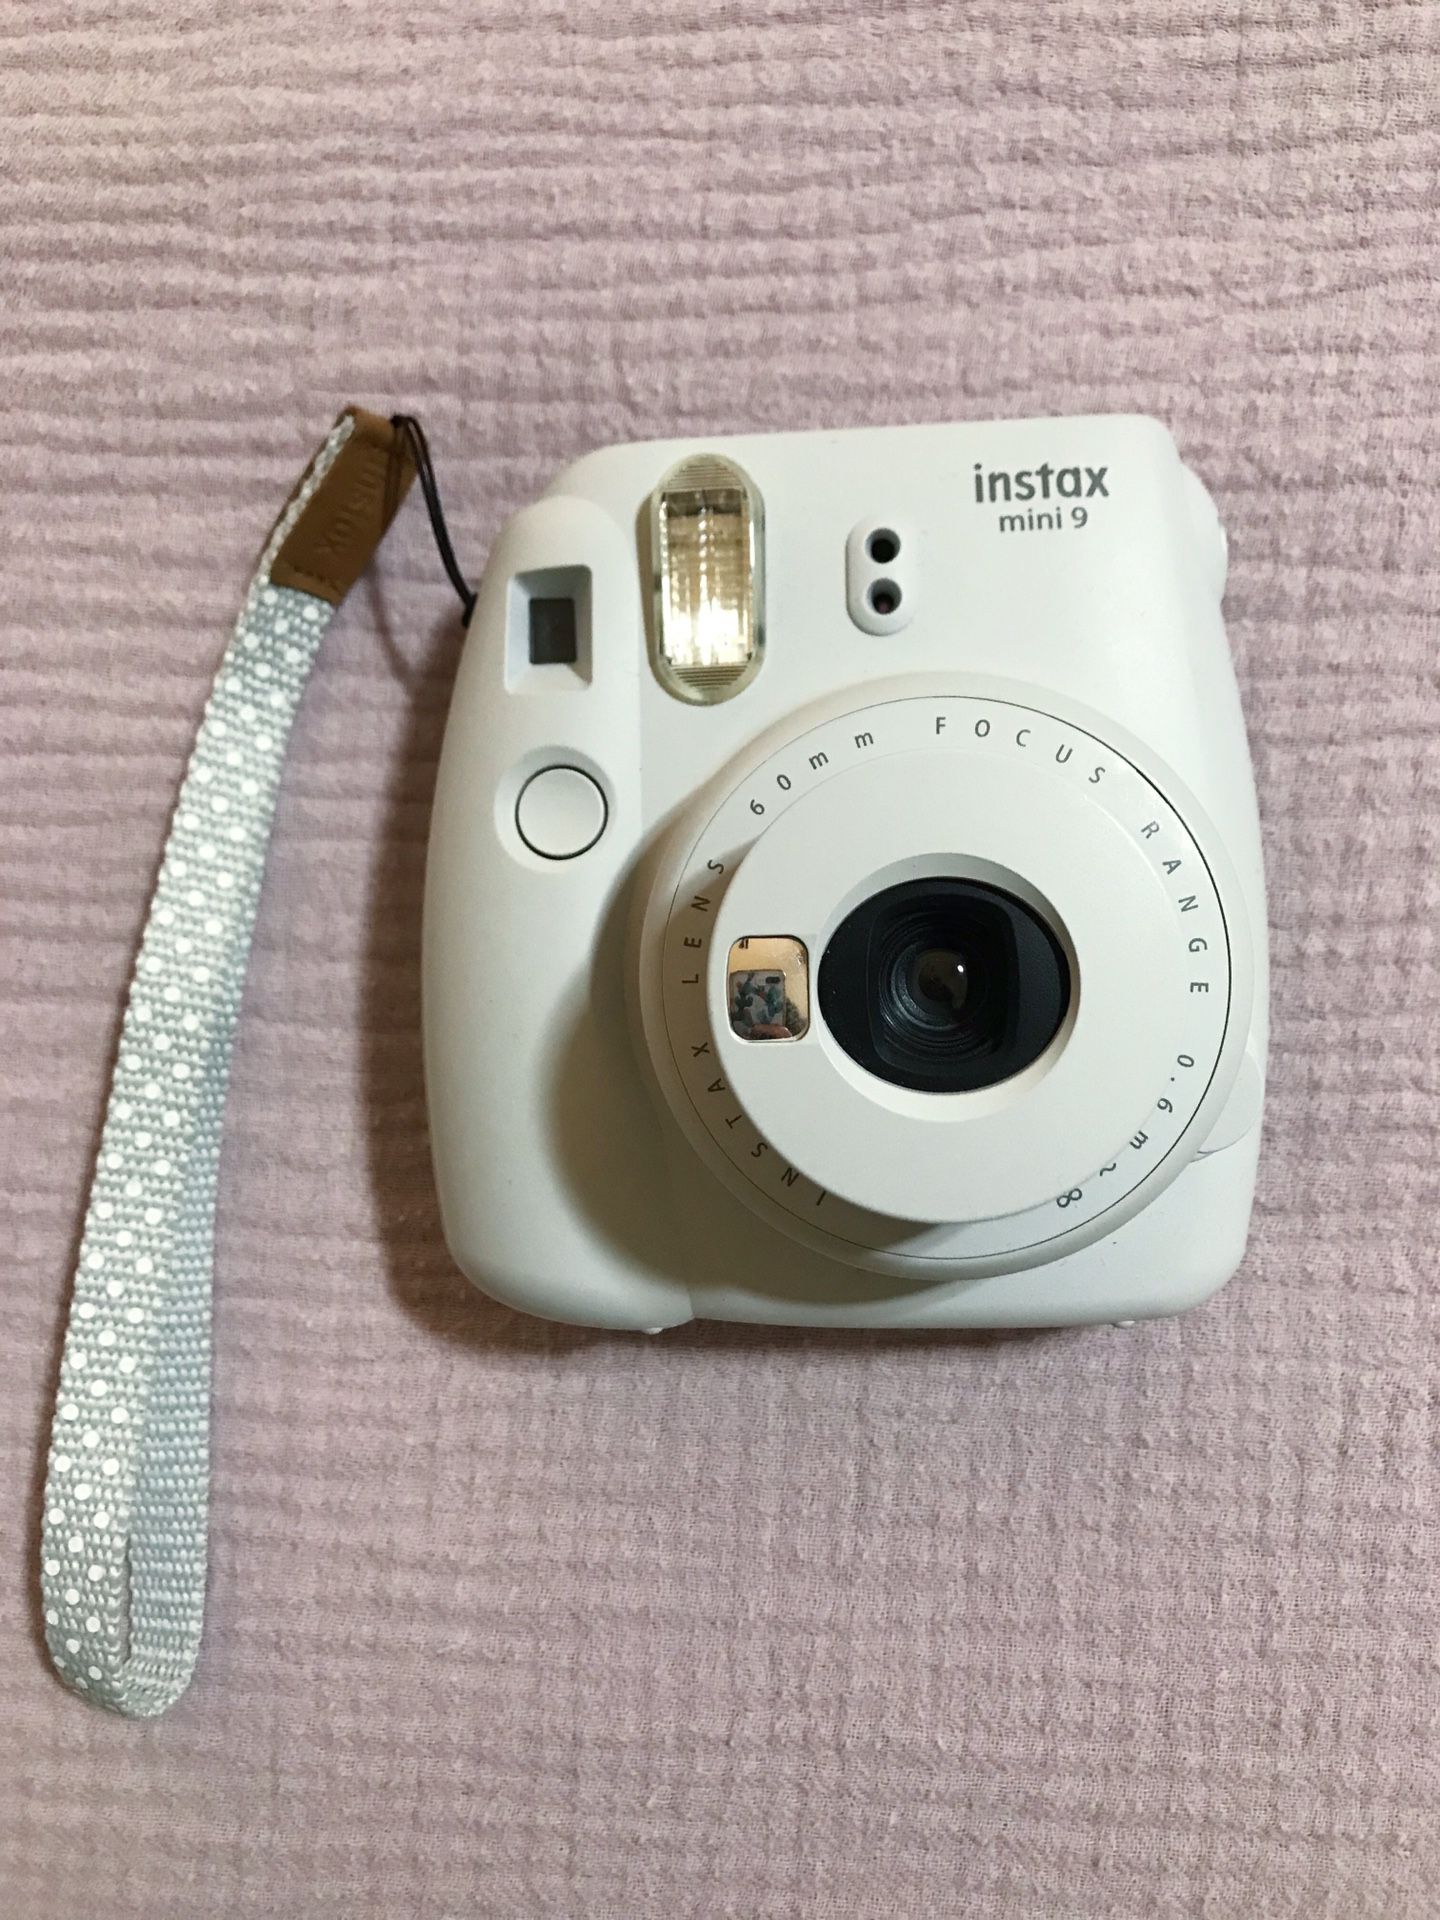 Instax mini 9 polaroid camera